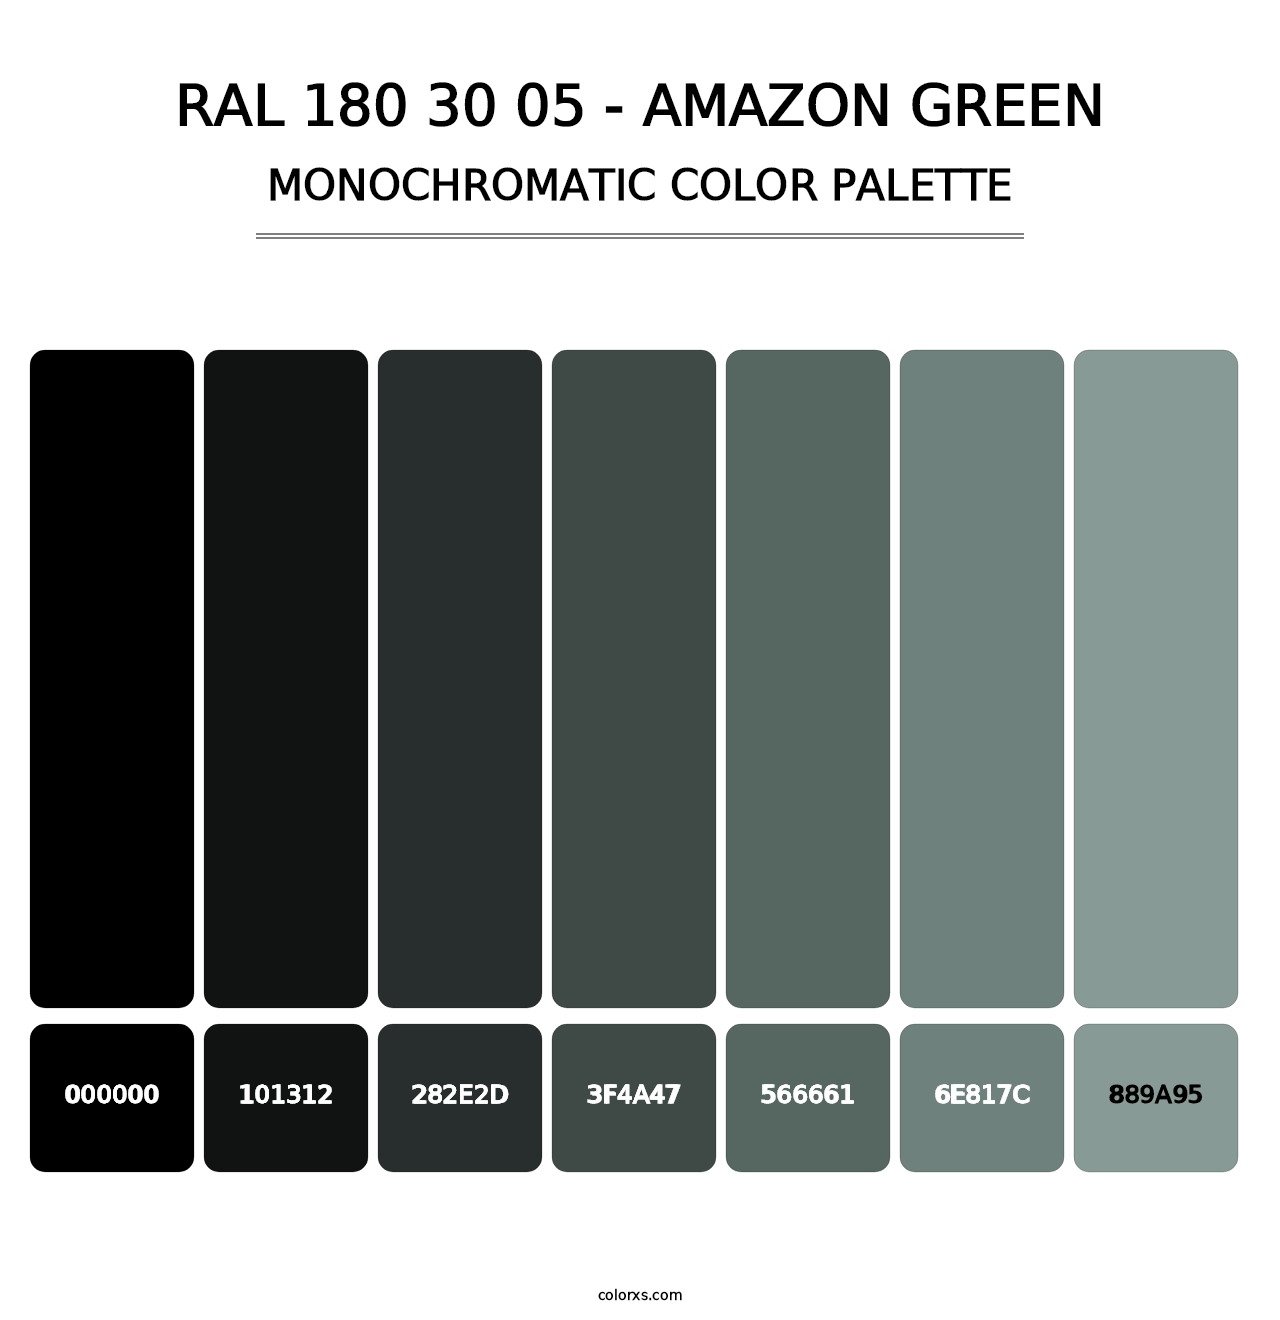 RAL 180 30 05 - Amazon Green - Monochromatic Color Palette